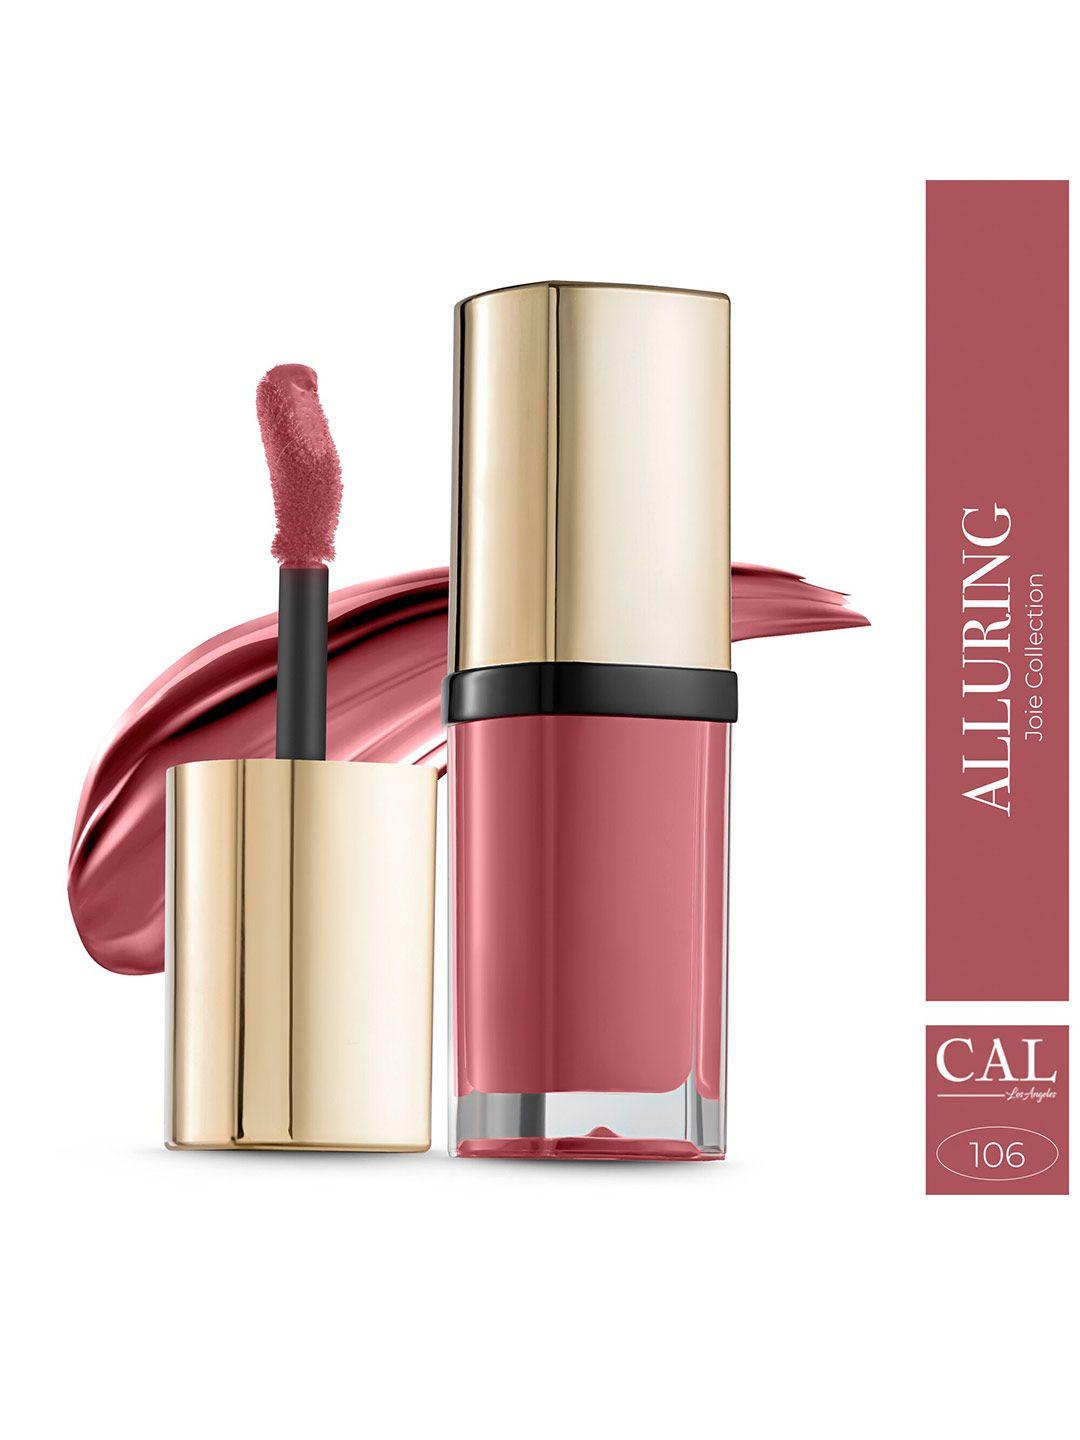 cal losangeles joie collection long lasting liquid matte lipstick 5 ml - alluring 106